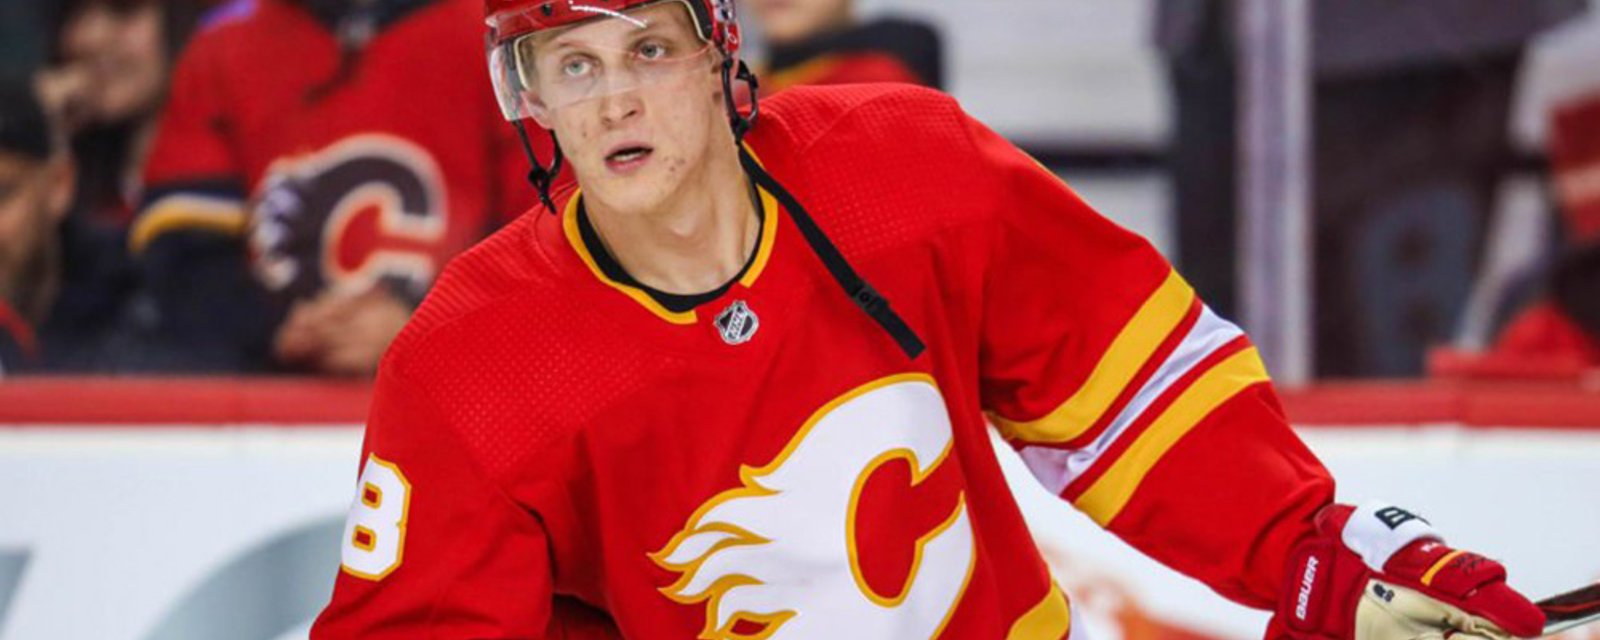 Calgary Flames announce contract extension for defenseman Juuso Välimäki​